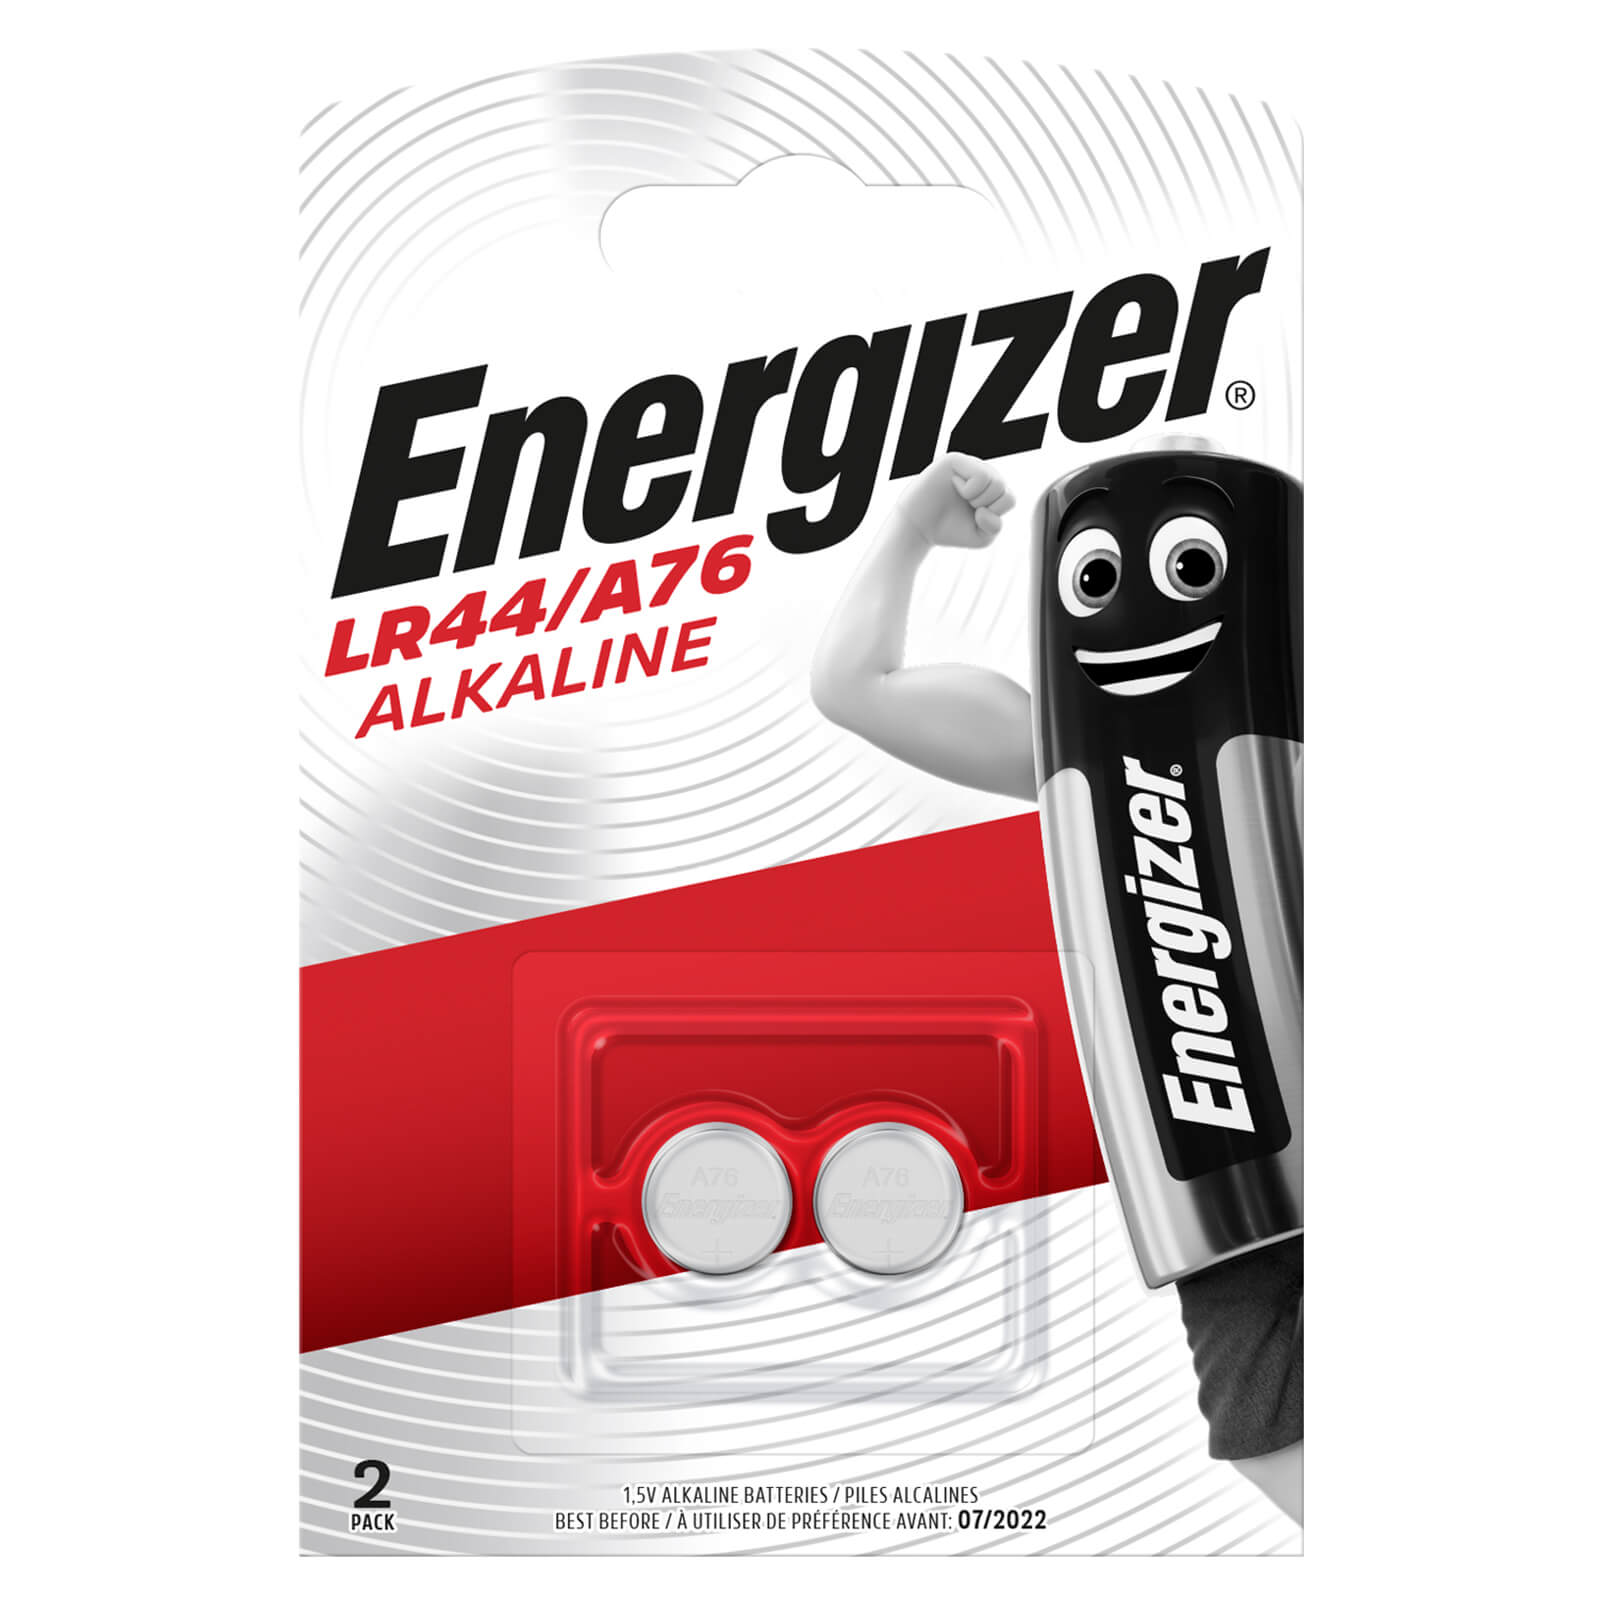 Energizer LR44 Alkaline Button Batteries - 2 Pack